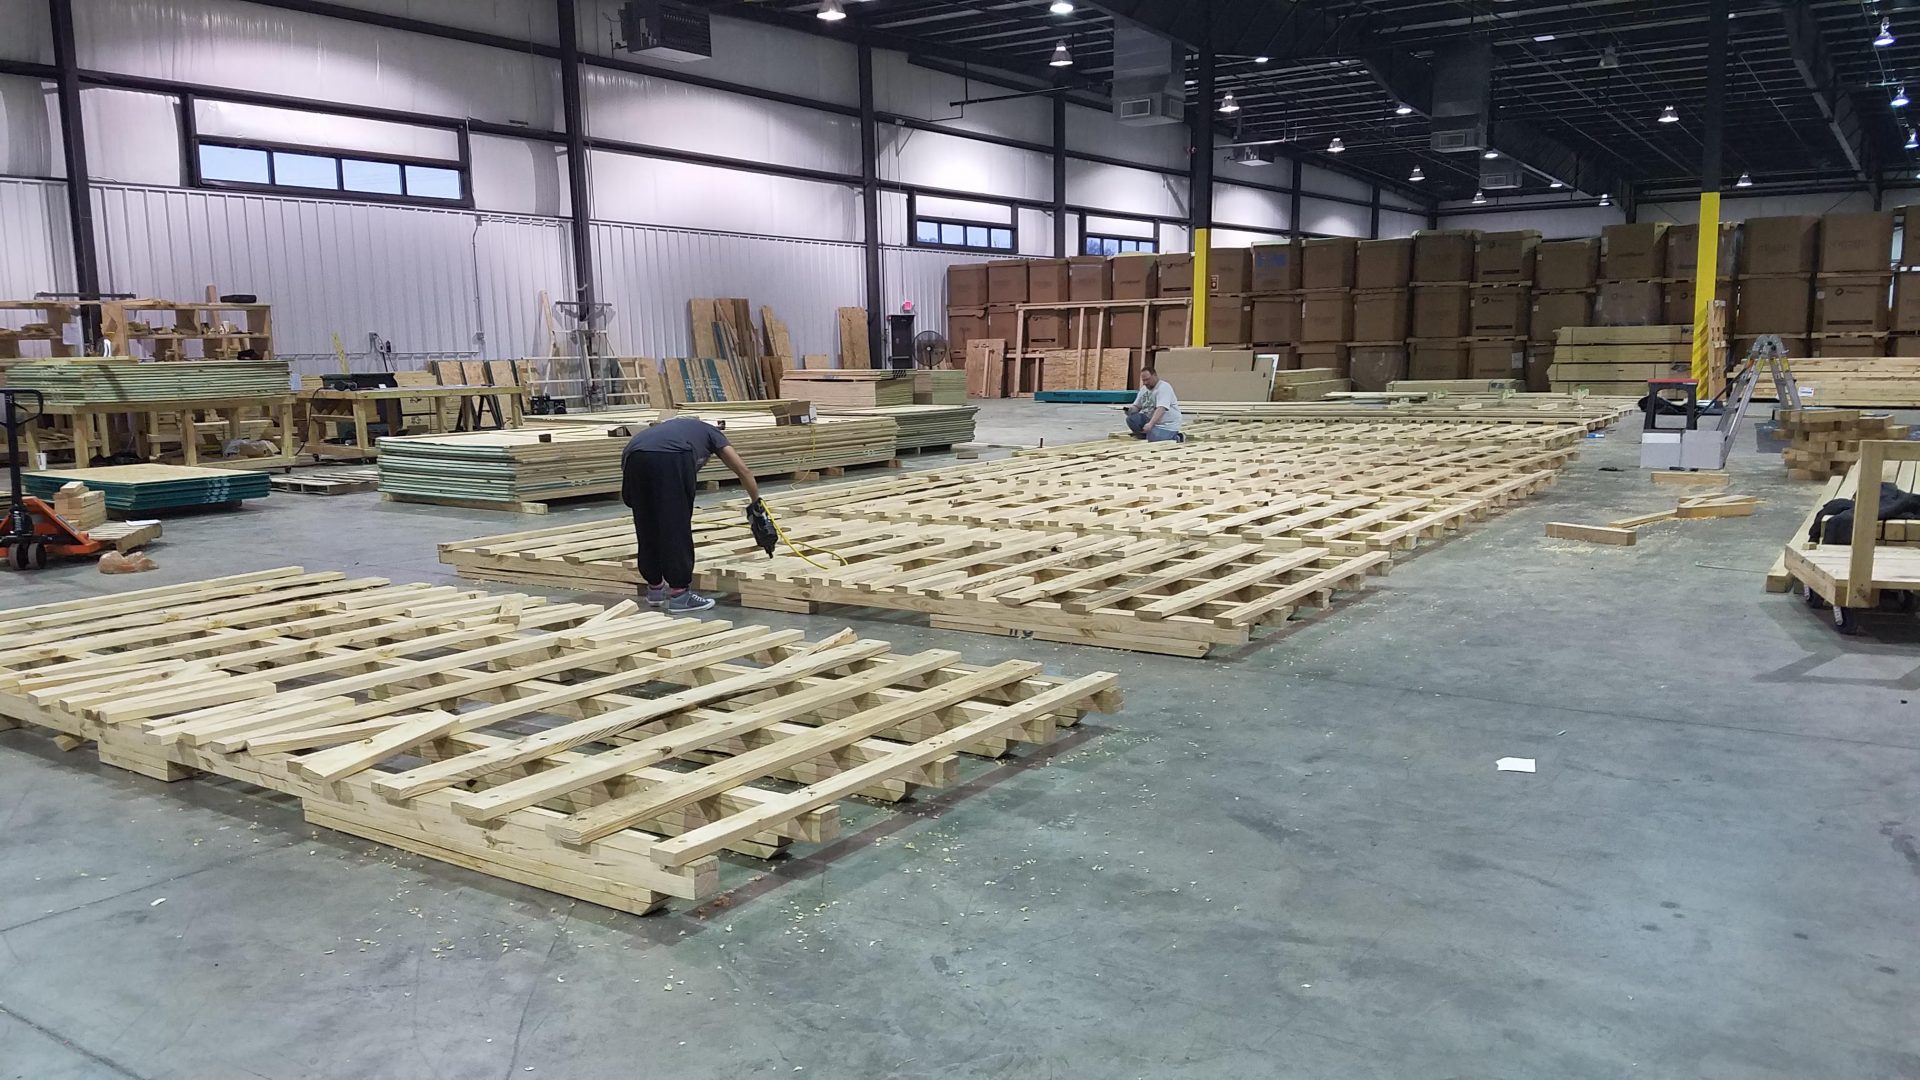 18-foot Car Crates Making